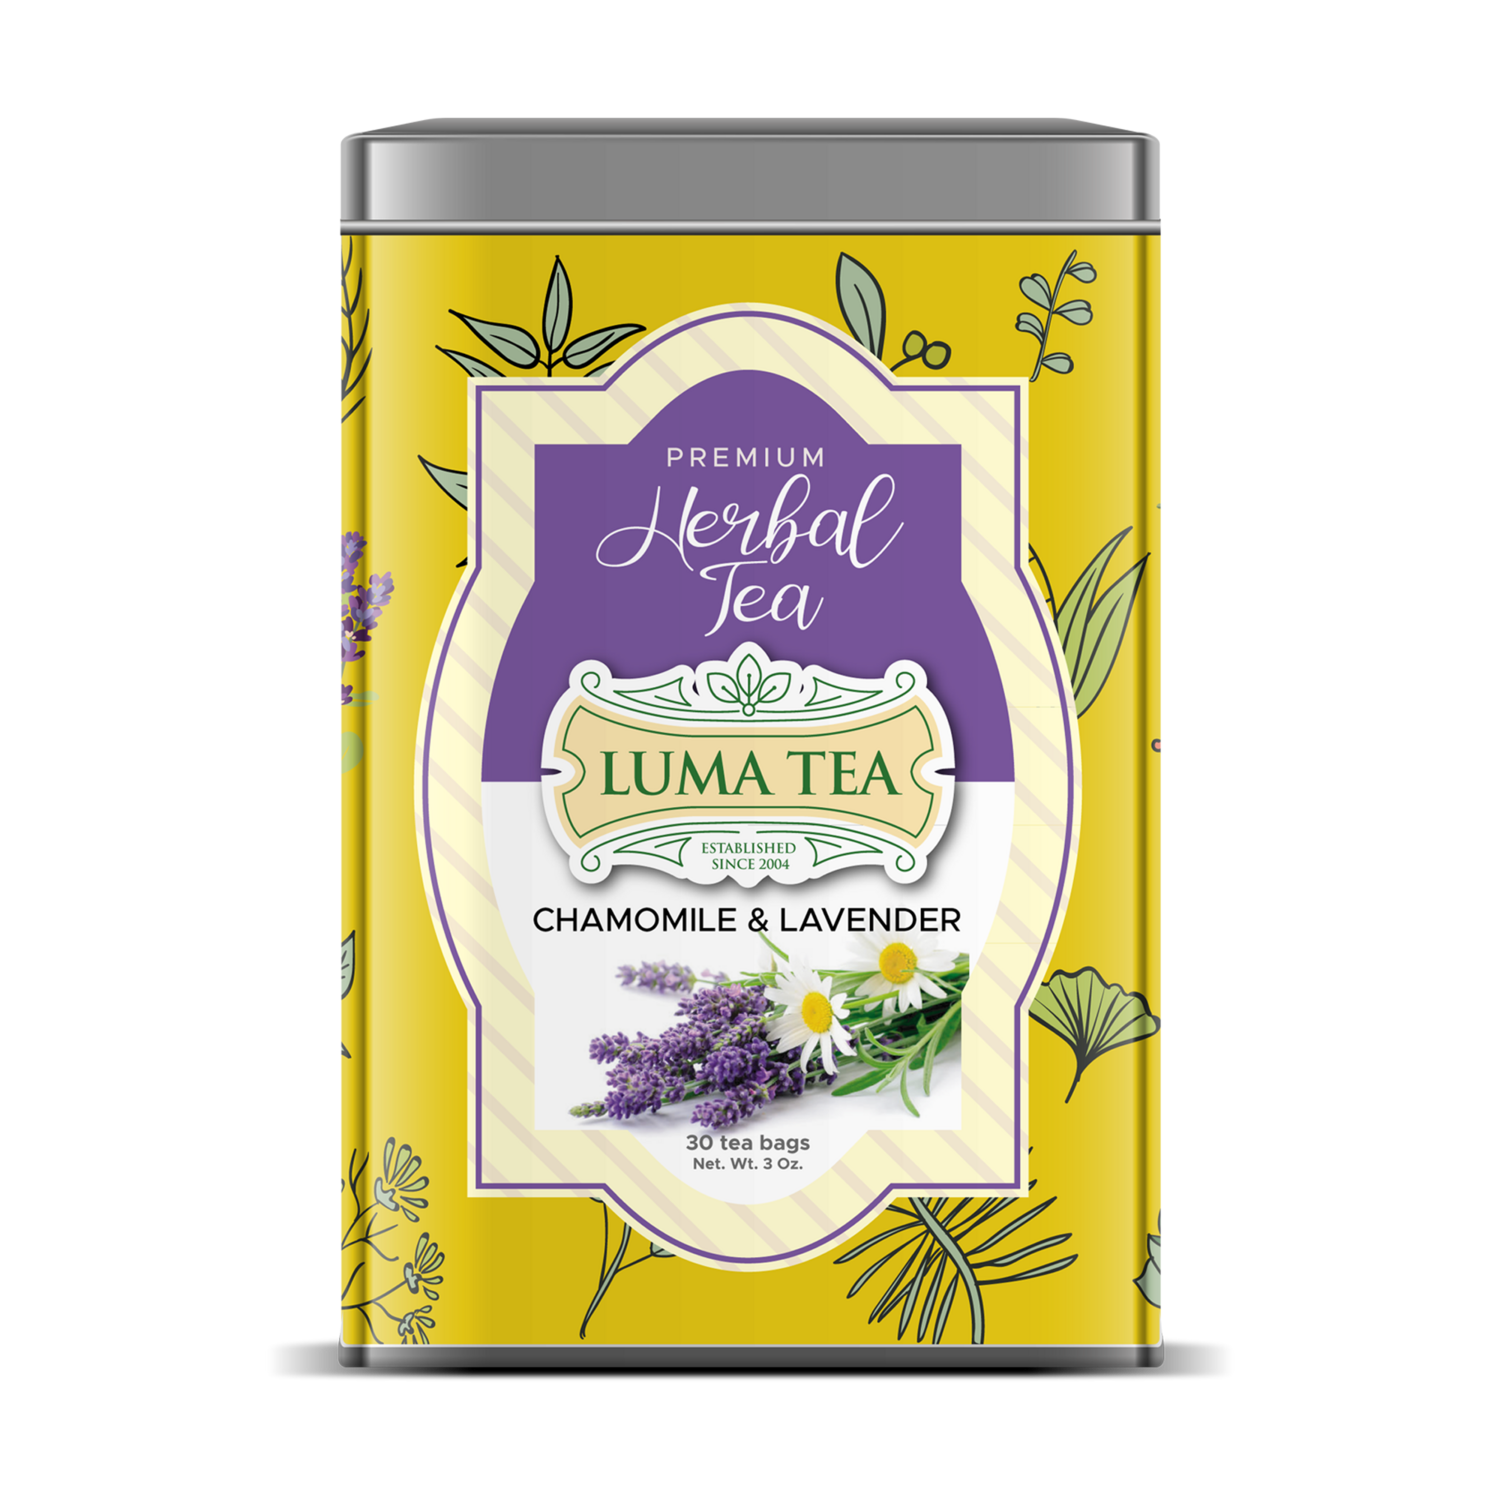 LUMA TEA CHAMOMLILE & LAVENDAR